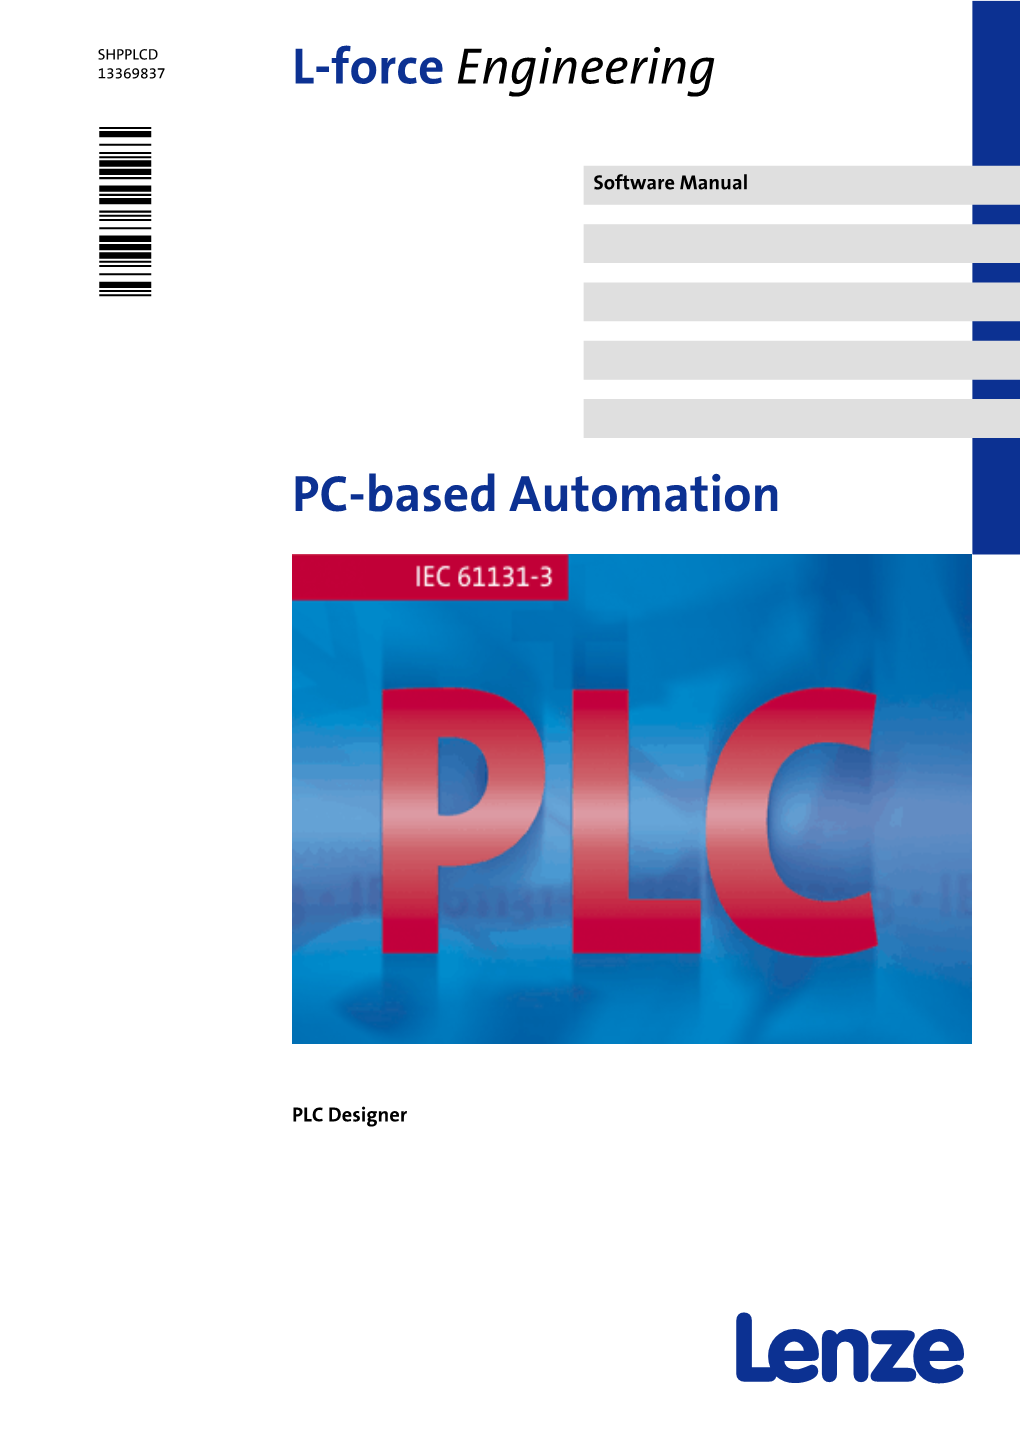 Software Manual PLC Designer__PLC Designer